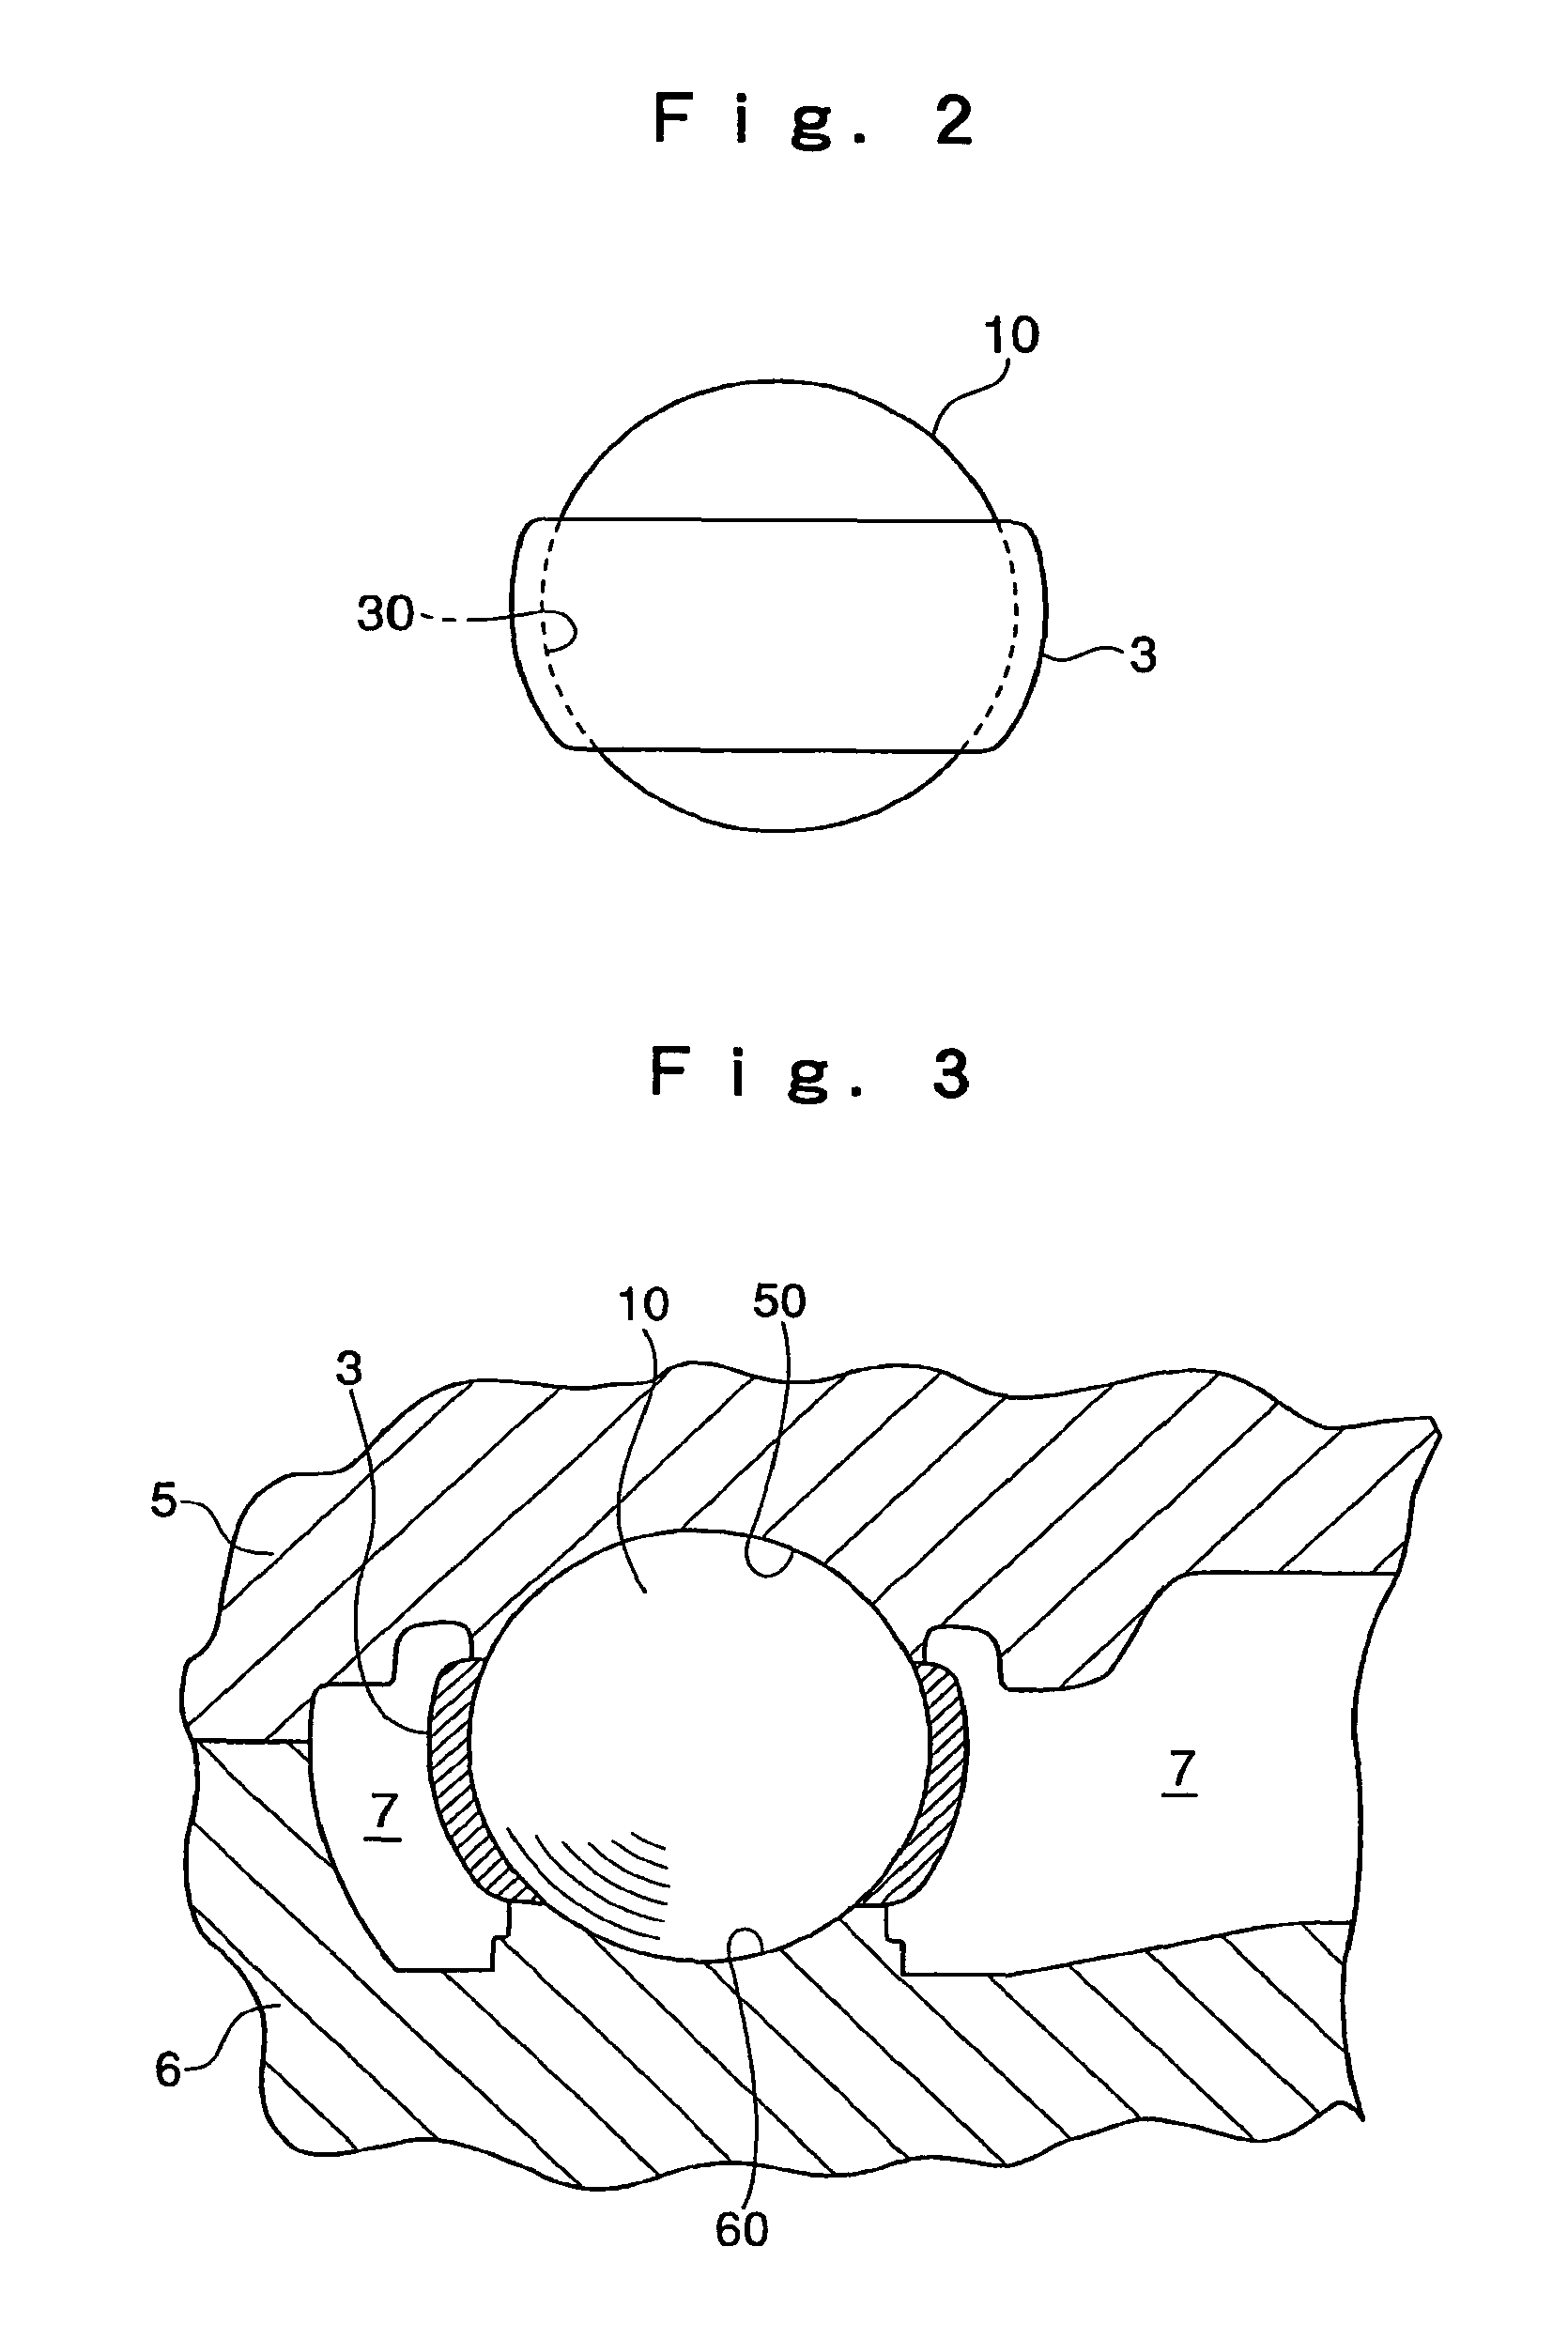 Method of manufacturing a spherical bearing